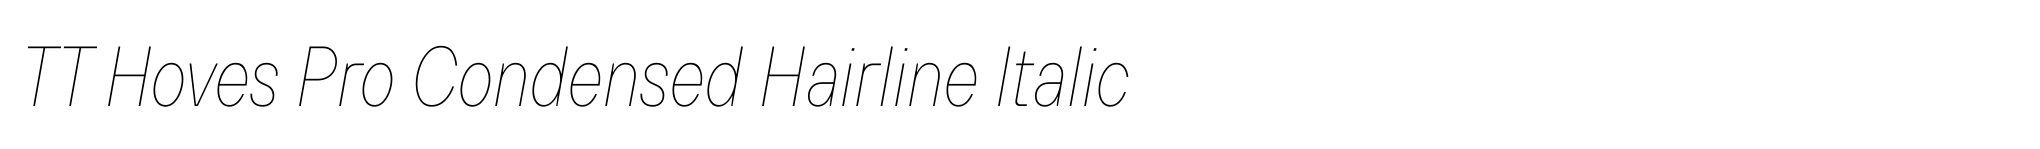 TT Hoves Pro Condensed Hairline Italic image